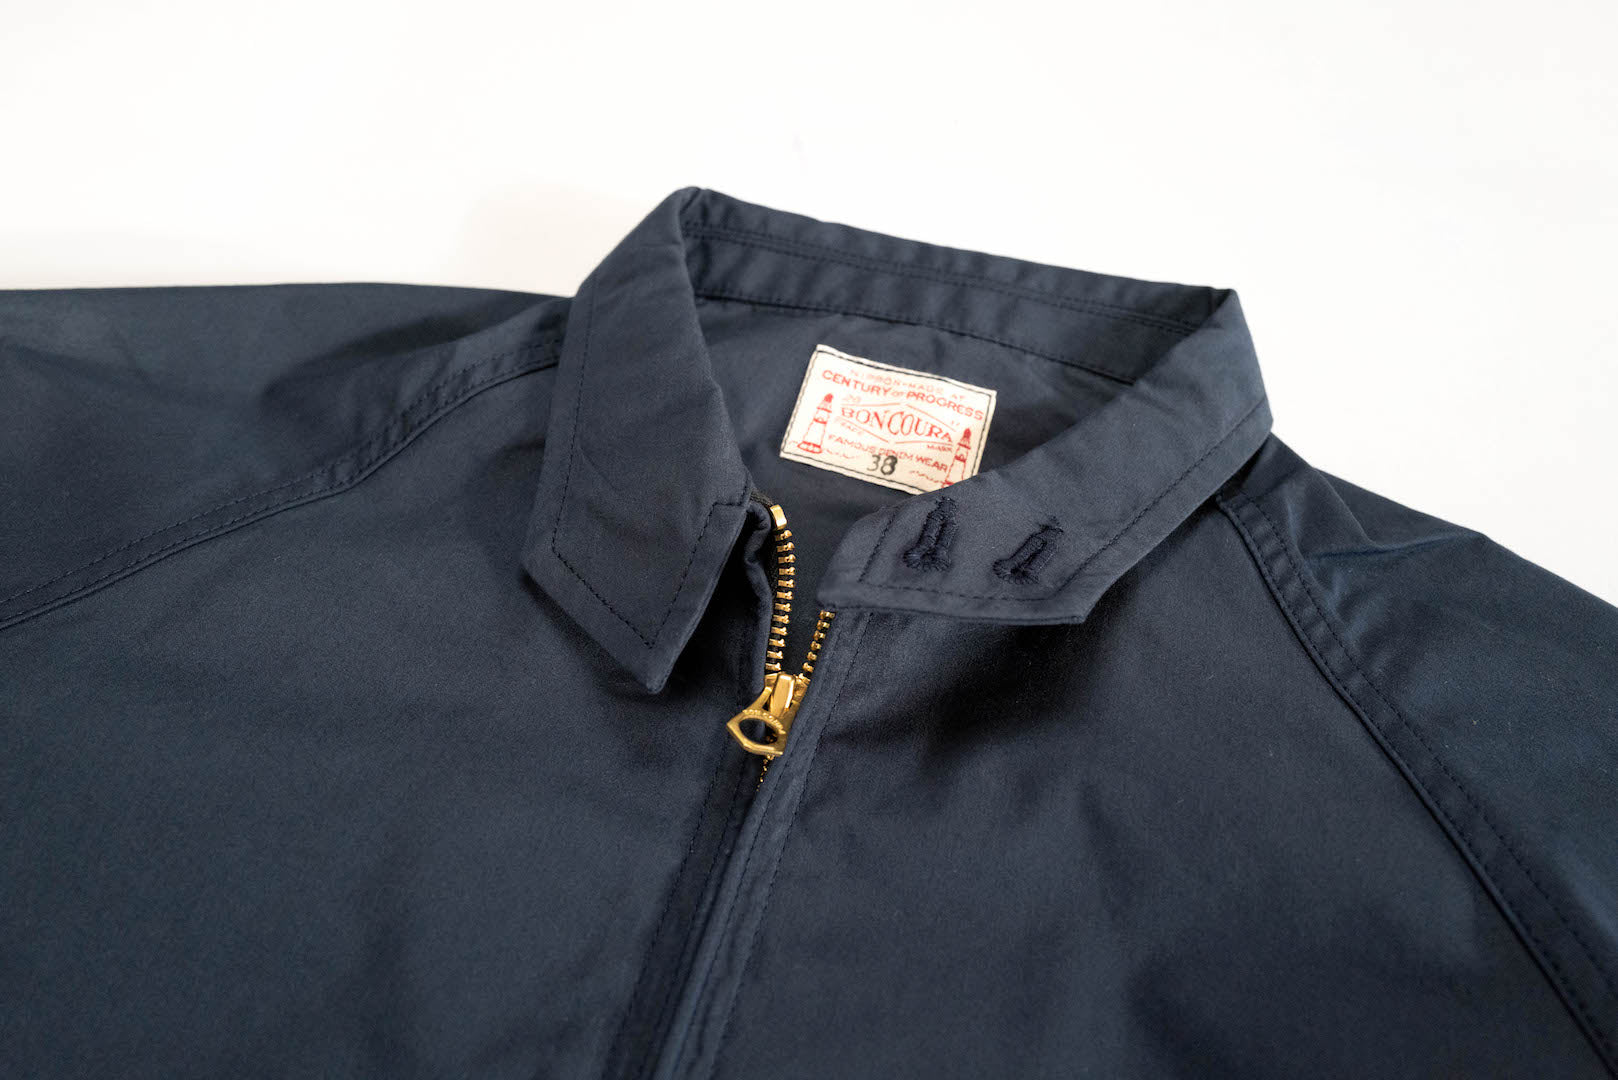 BONCOURA Cotton/Nylon Twill "Dog Ear" Sport Jacket (Navy)